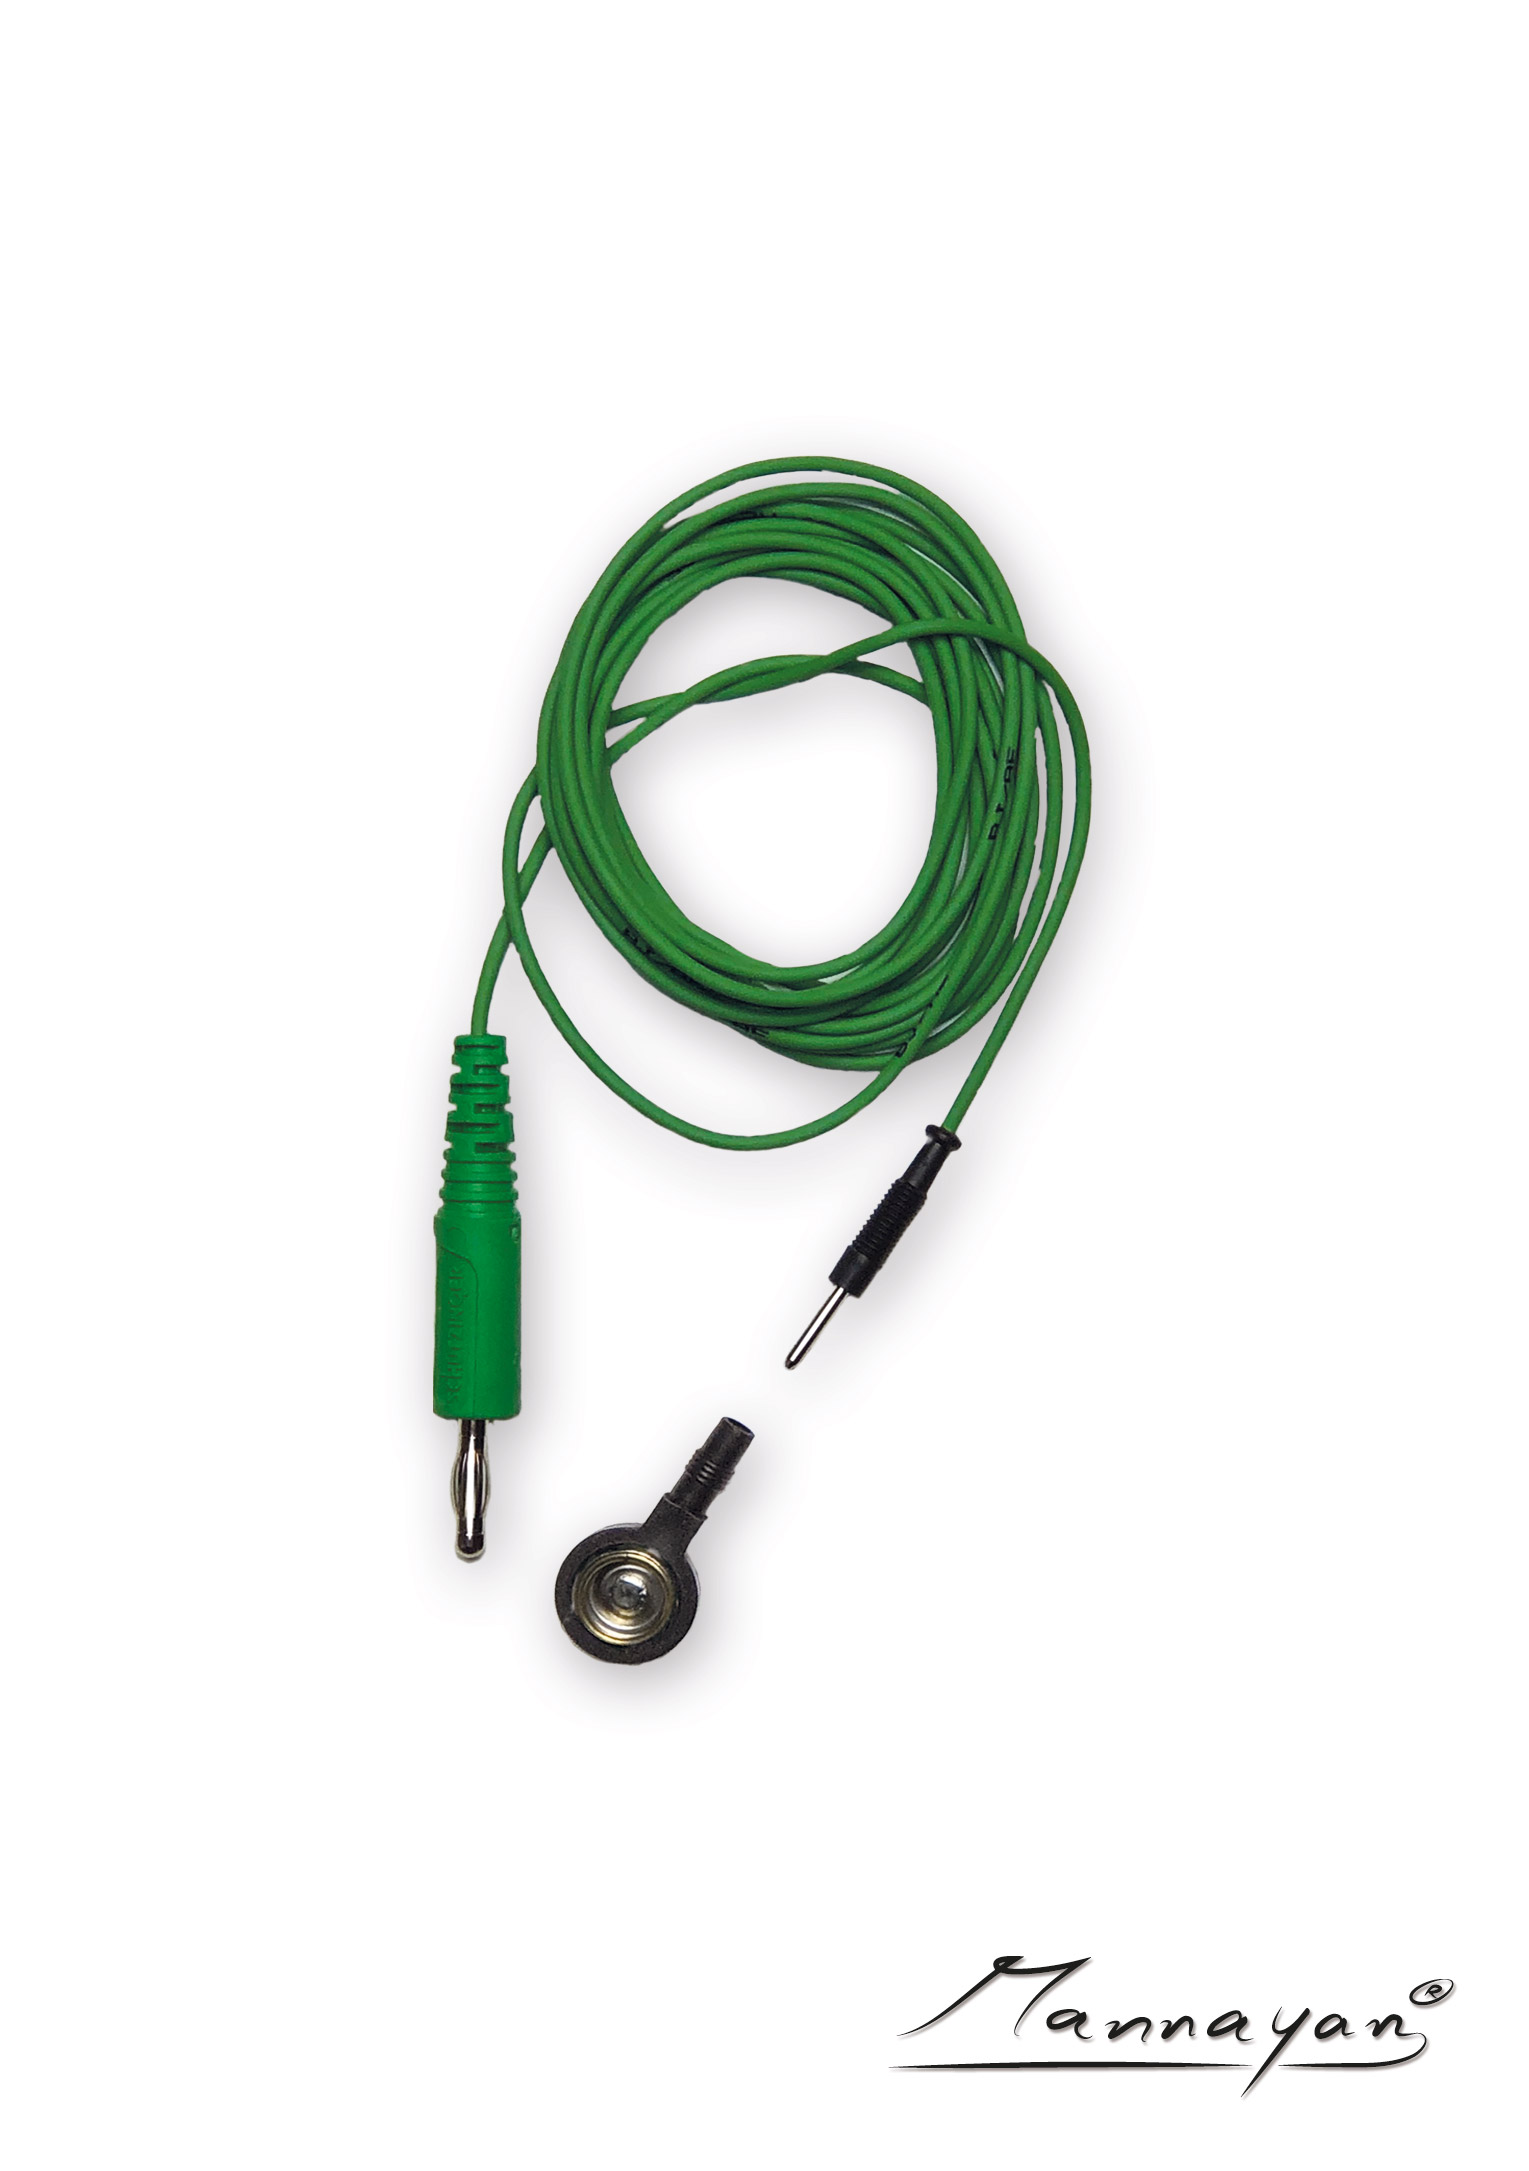 Cable (2,5 m) con adaptador de conector para electrodos textiles de superficie (verde)